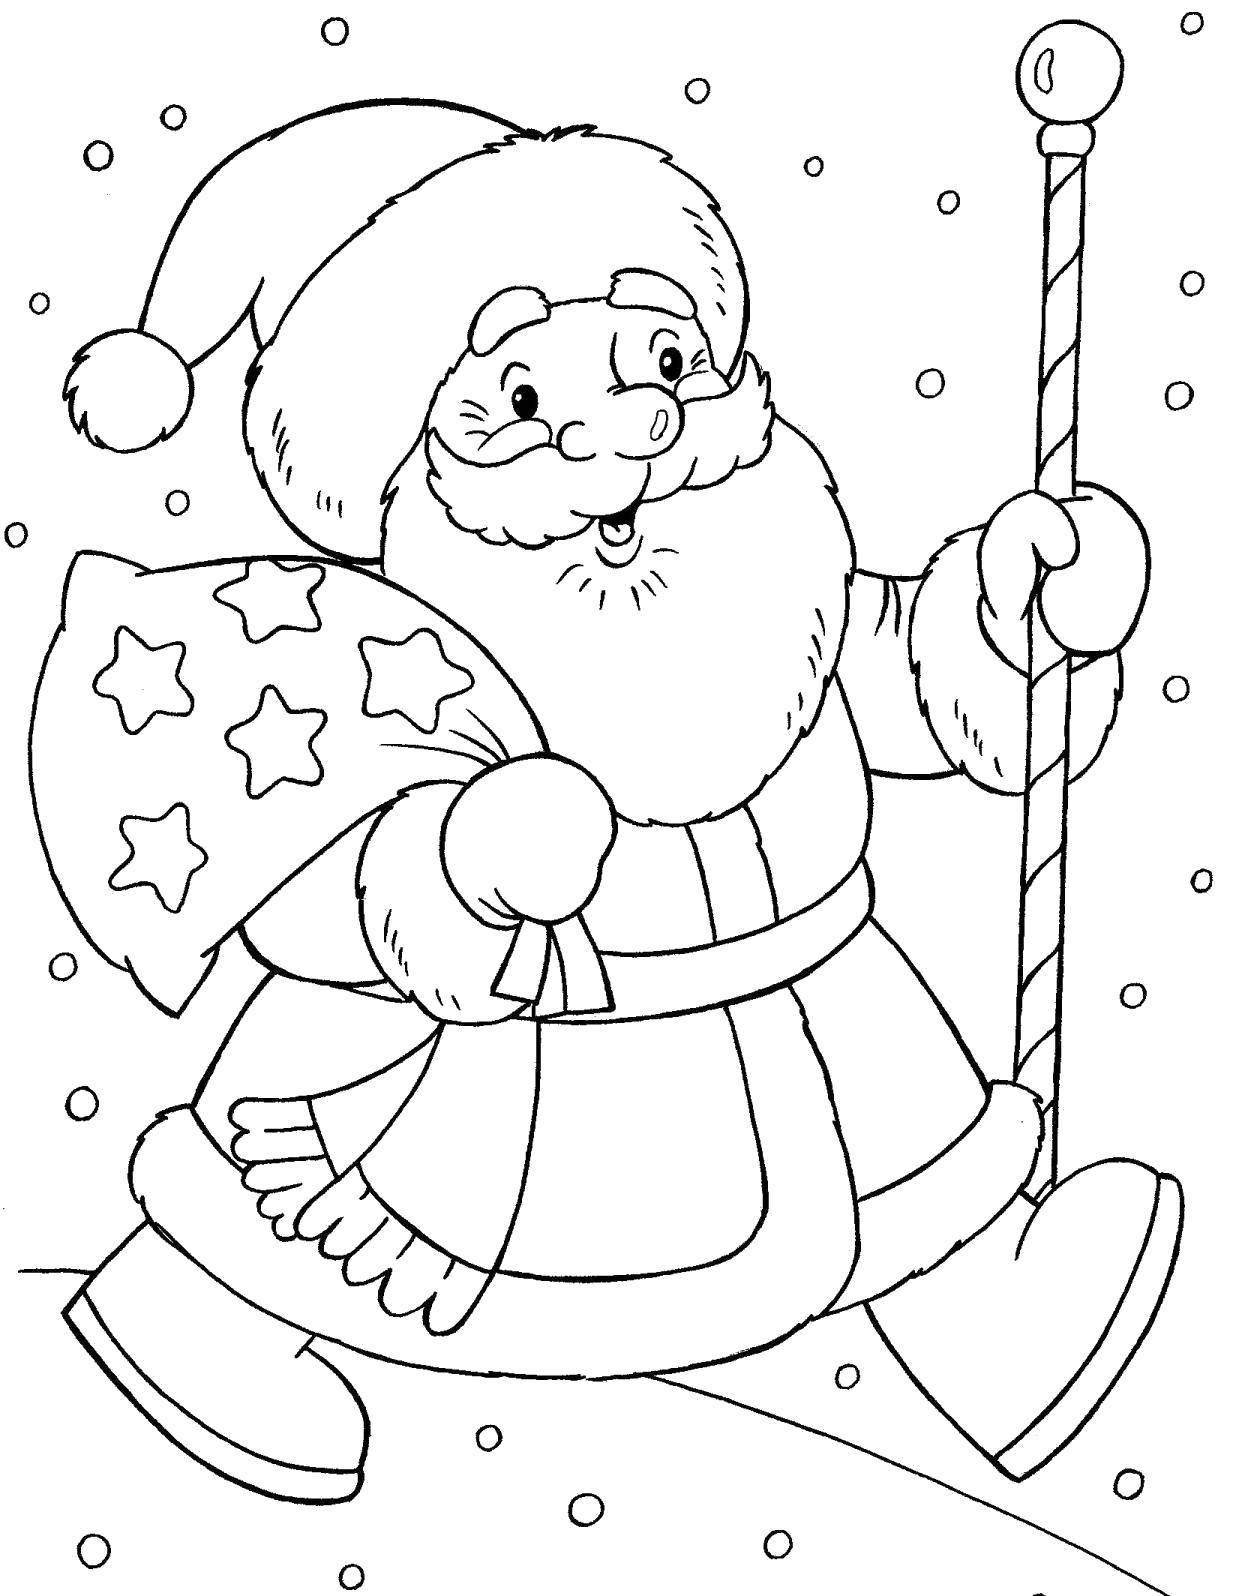 Название: Раскраска Дед мороз пришёл дарить подарки. Категория: дед мороз. Теги: Новый Год, Дед Мороз, подарки.